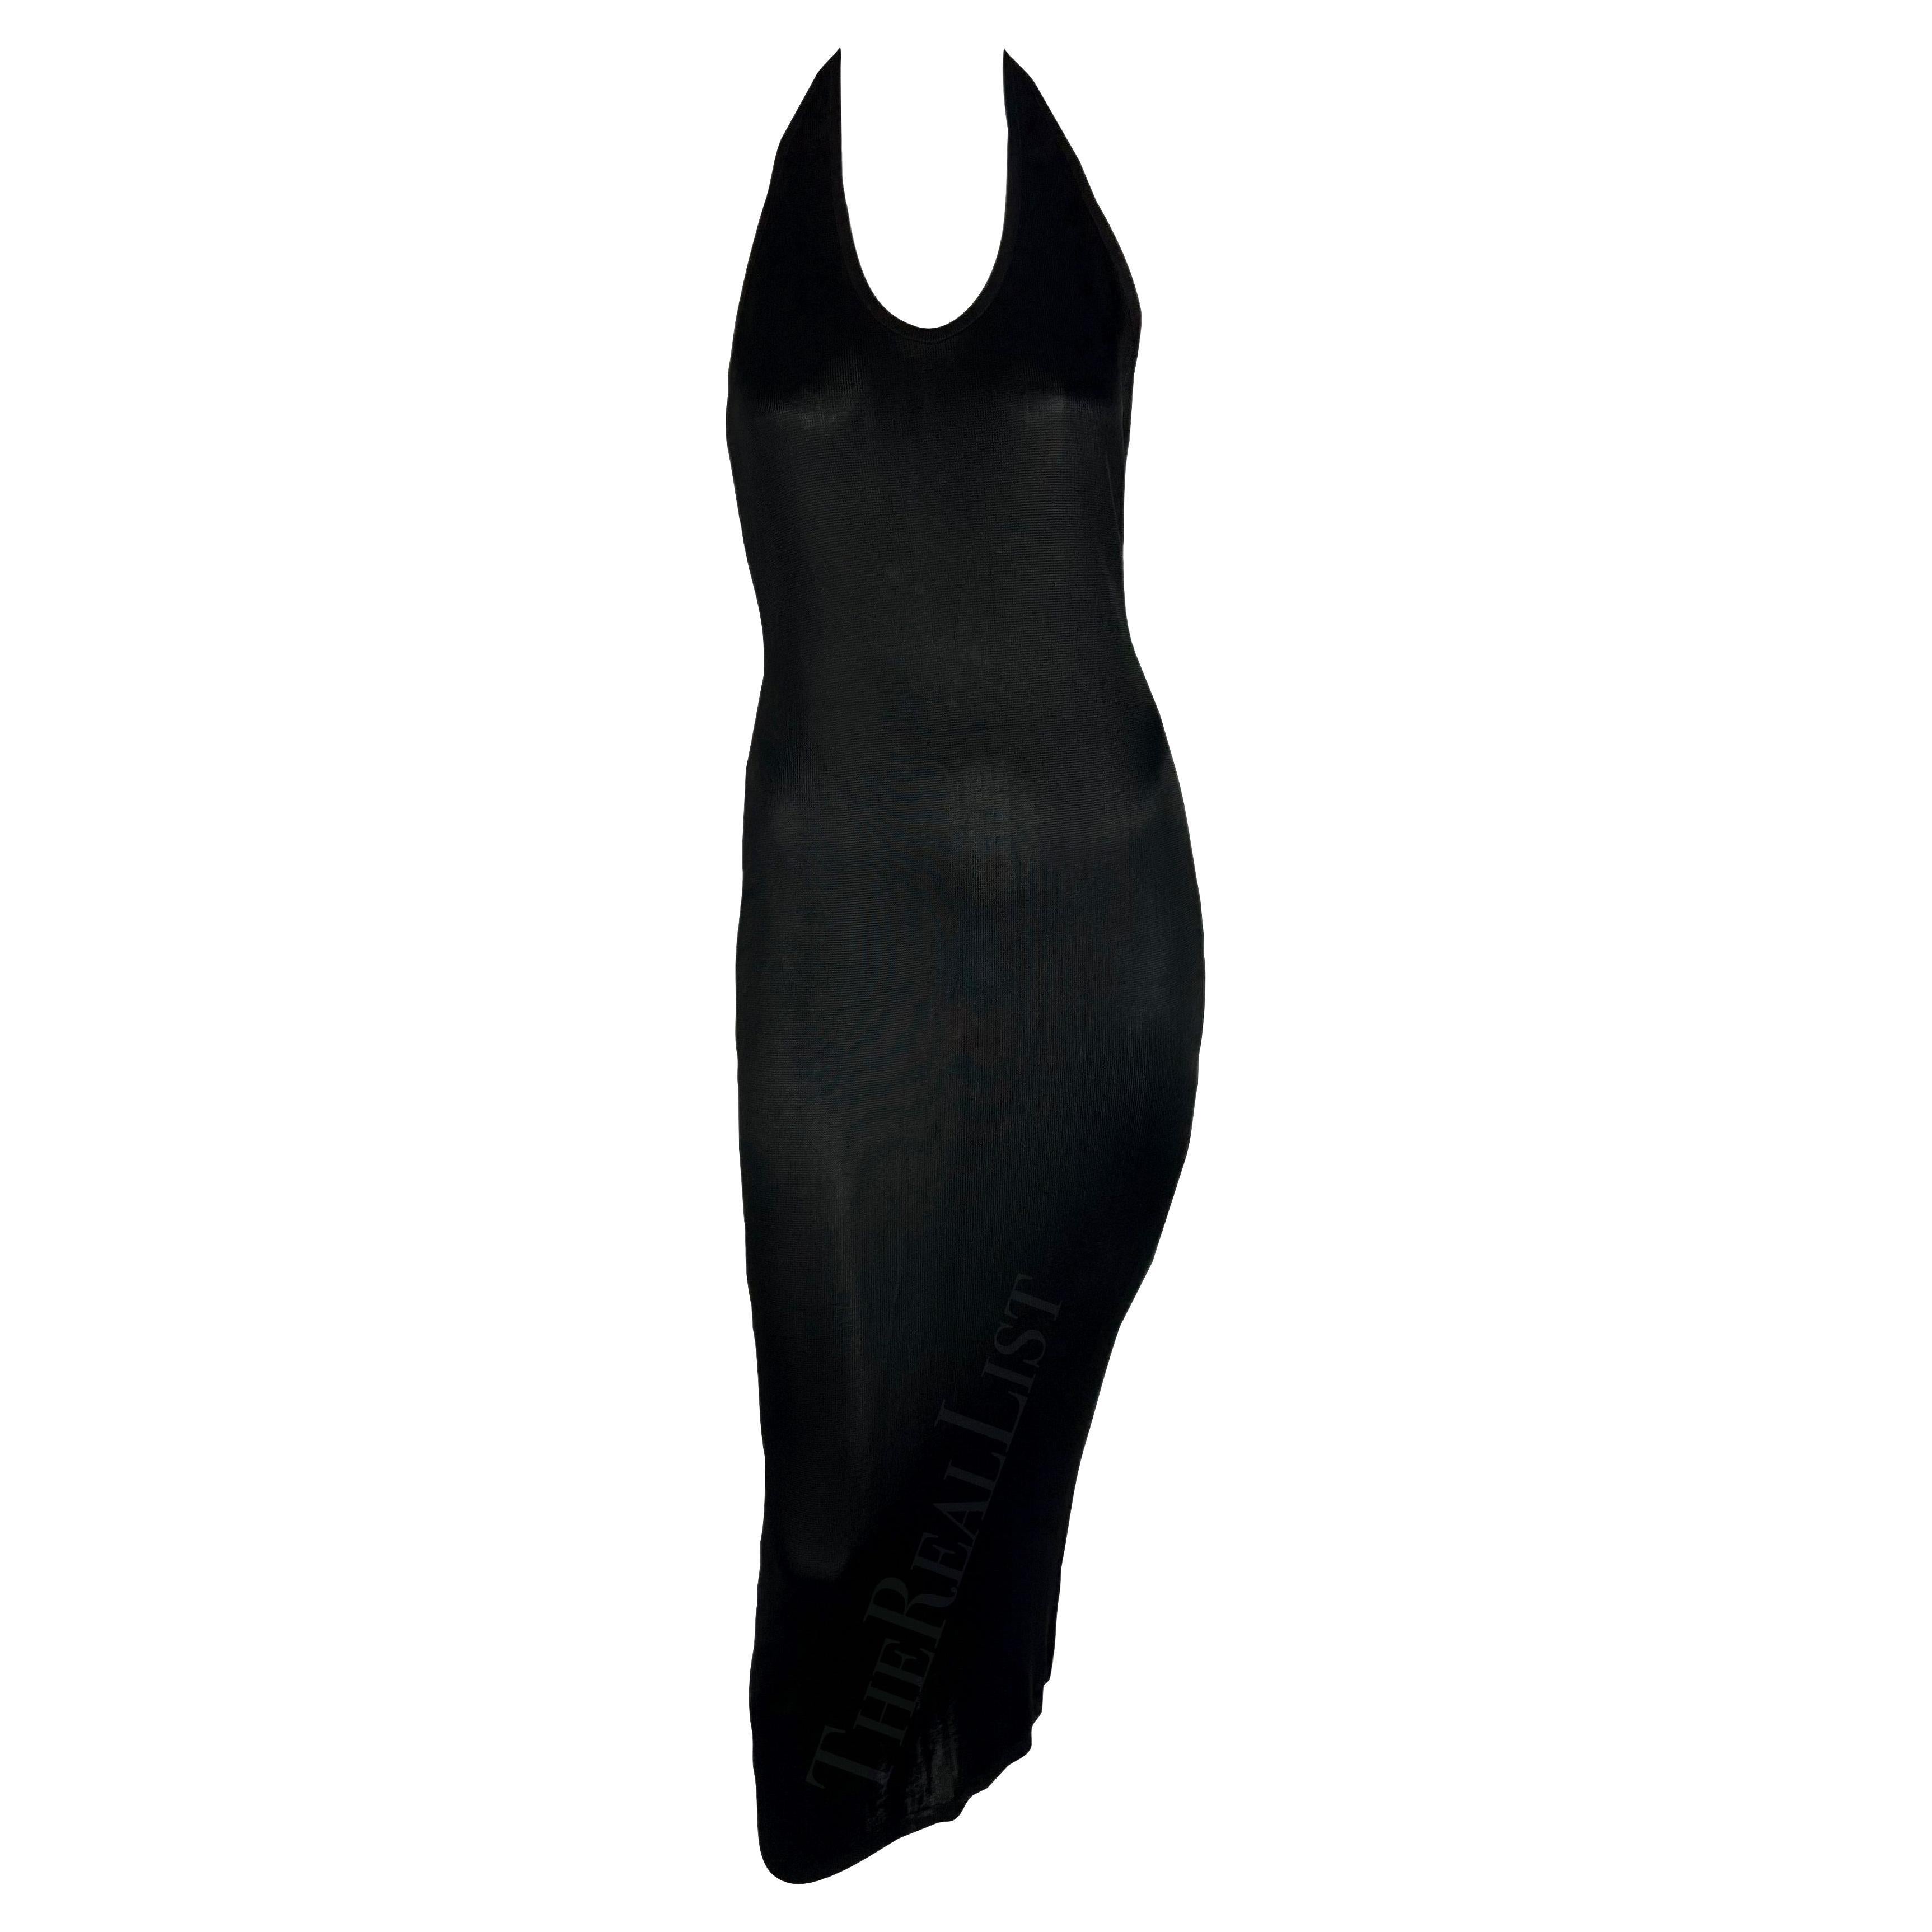 S/S 1986 Azzedine Alaïa Black Knit Halter Neck Bodycon Backless Dress For Sale